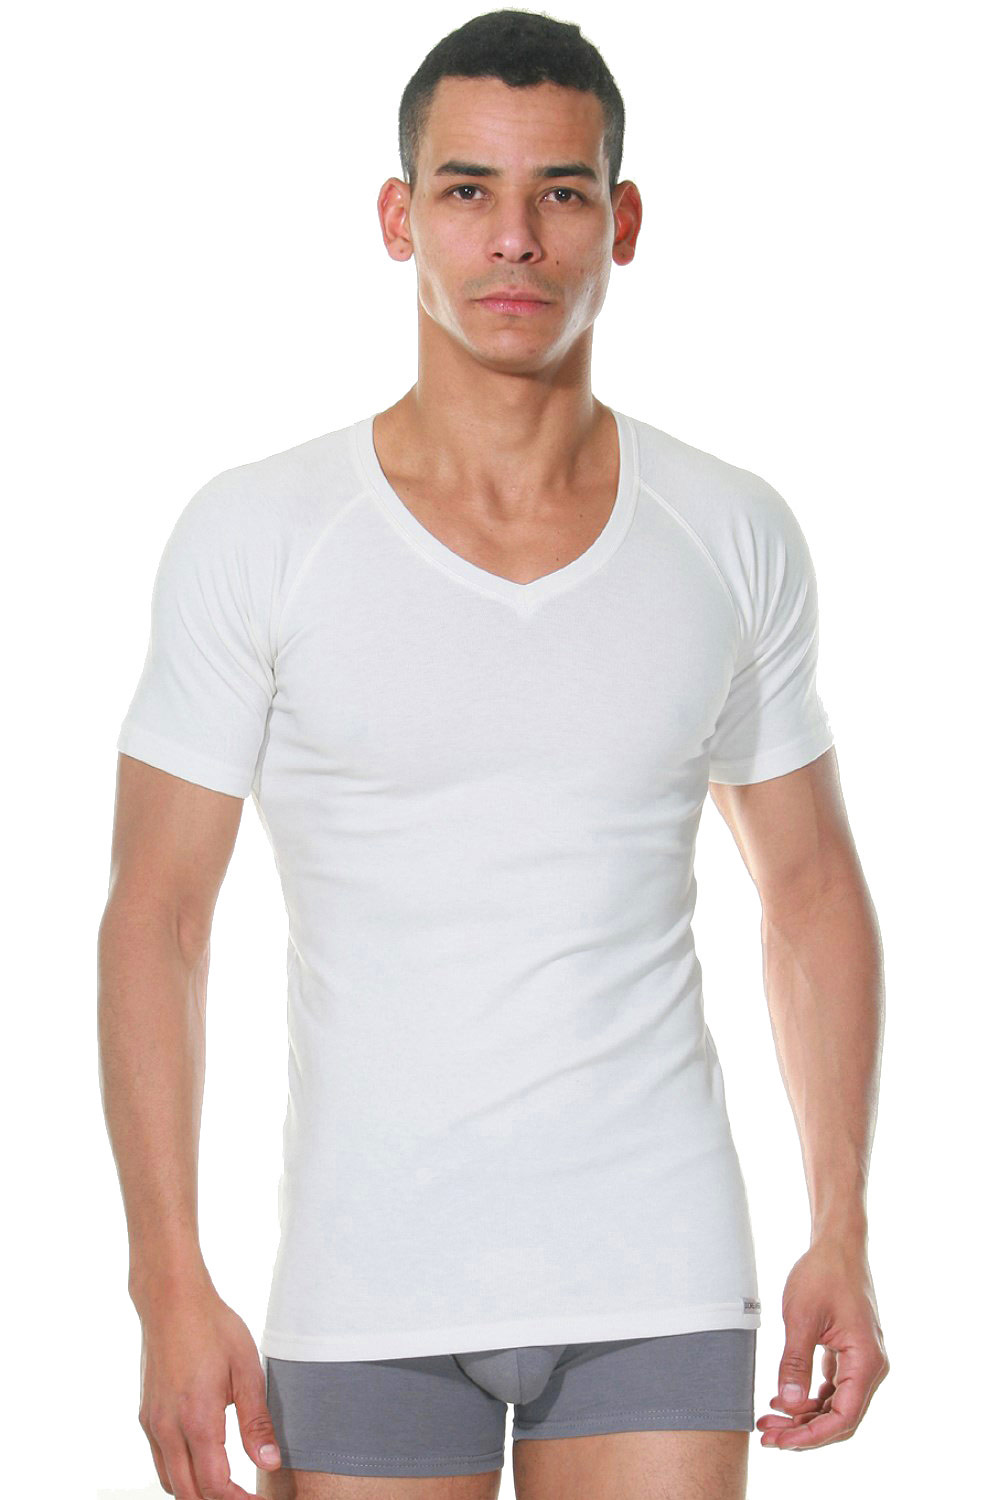 DOREANSE V-T-shirt | shop at OBOY.com